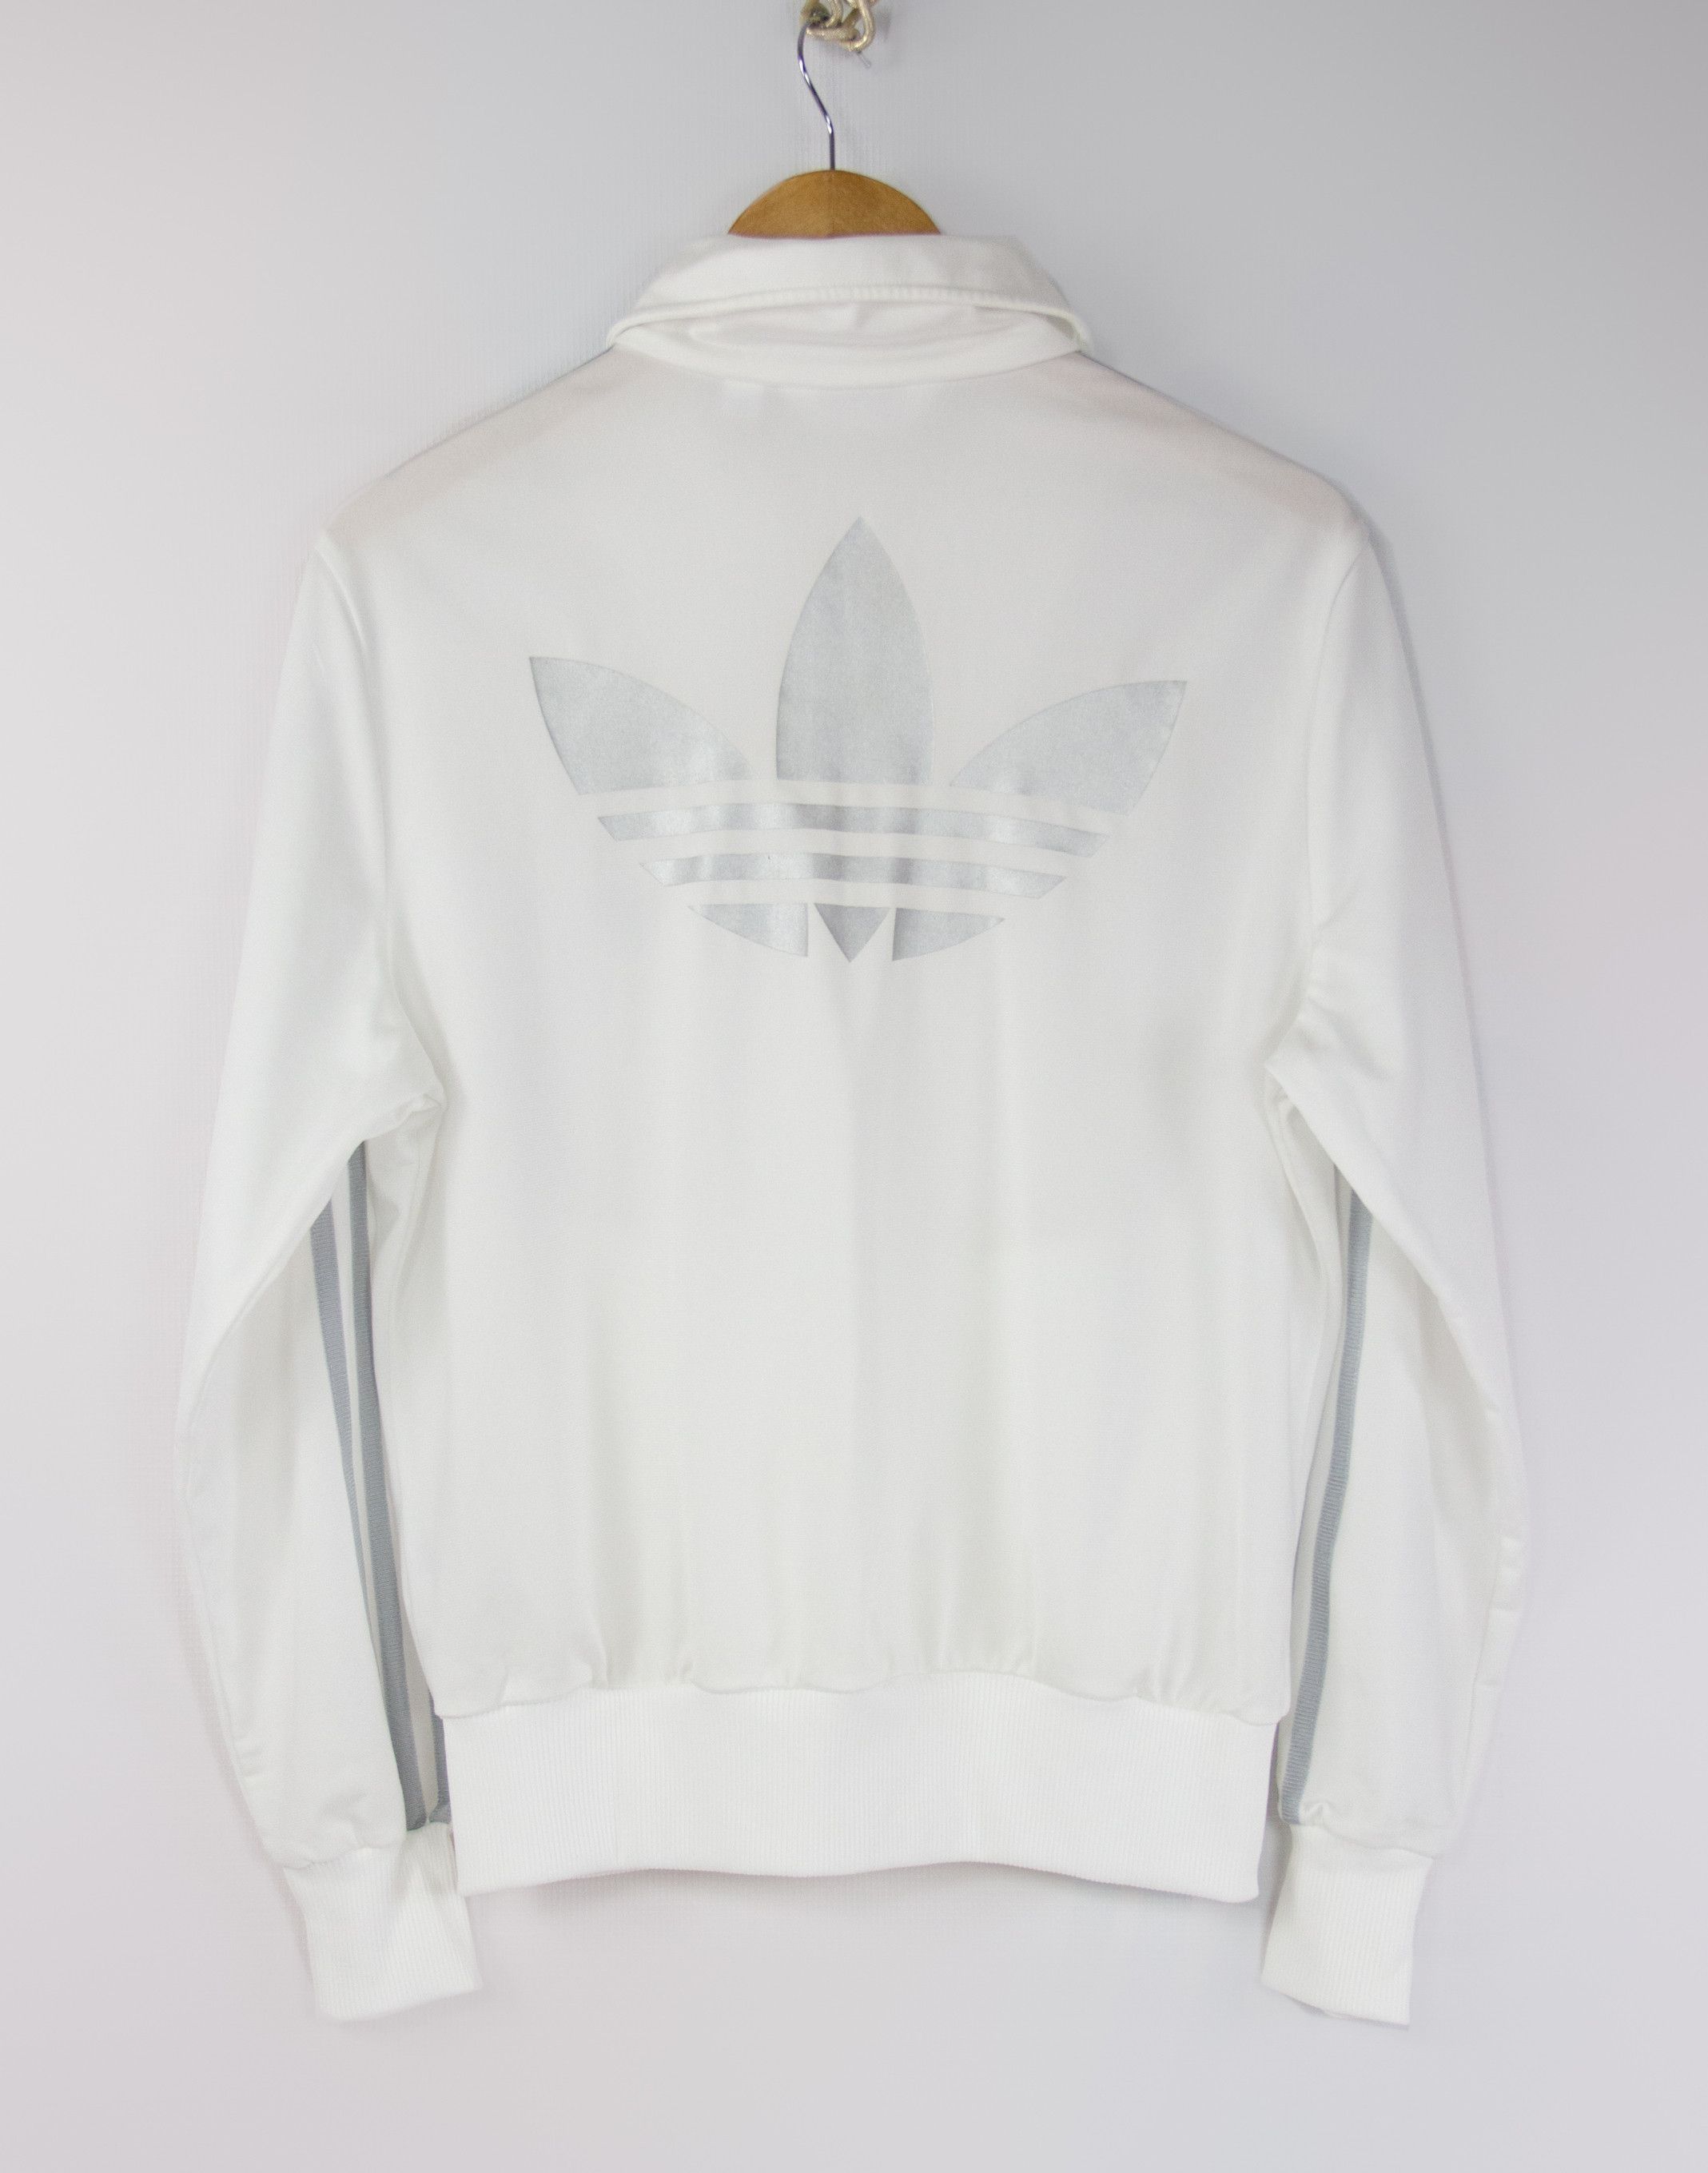 Adidas Adidas Originals White Track Jacket with Silver Stripes, Size M Size US M / EU 48-50 / 2 - 6 Thumbnail